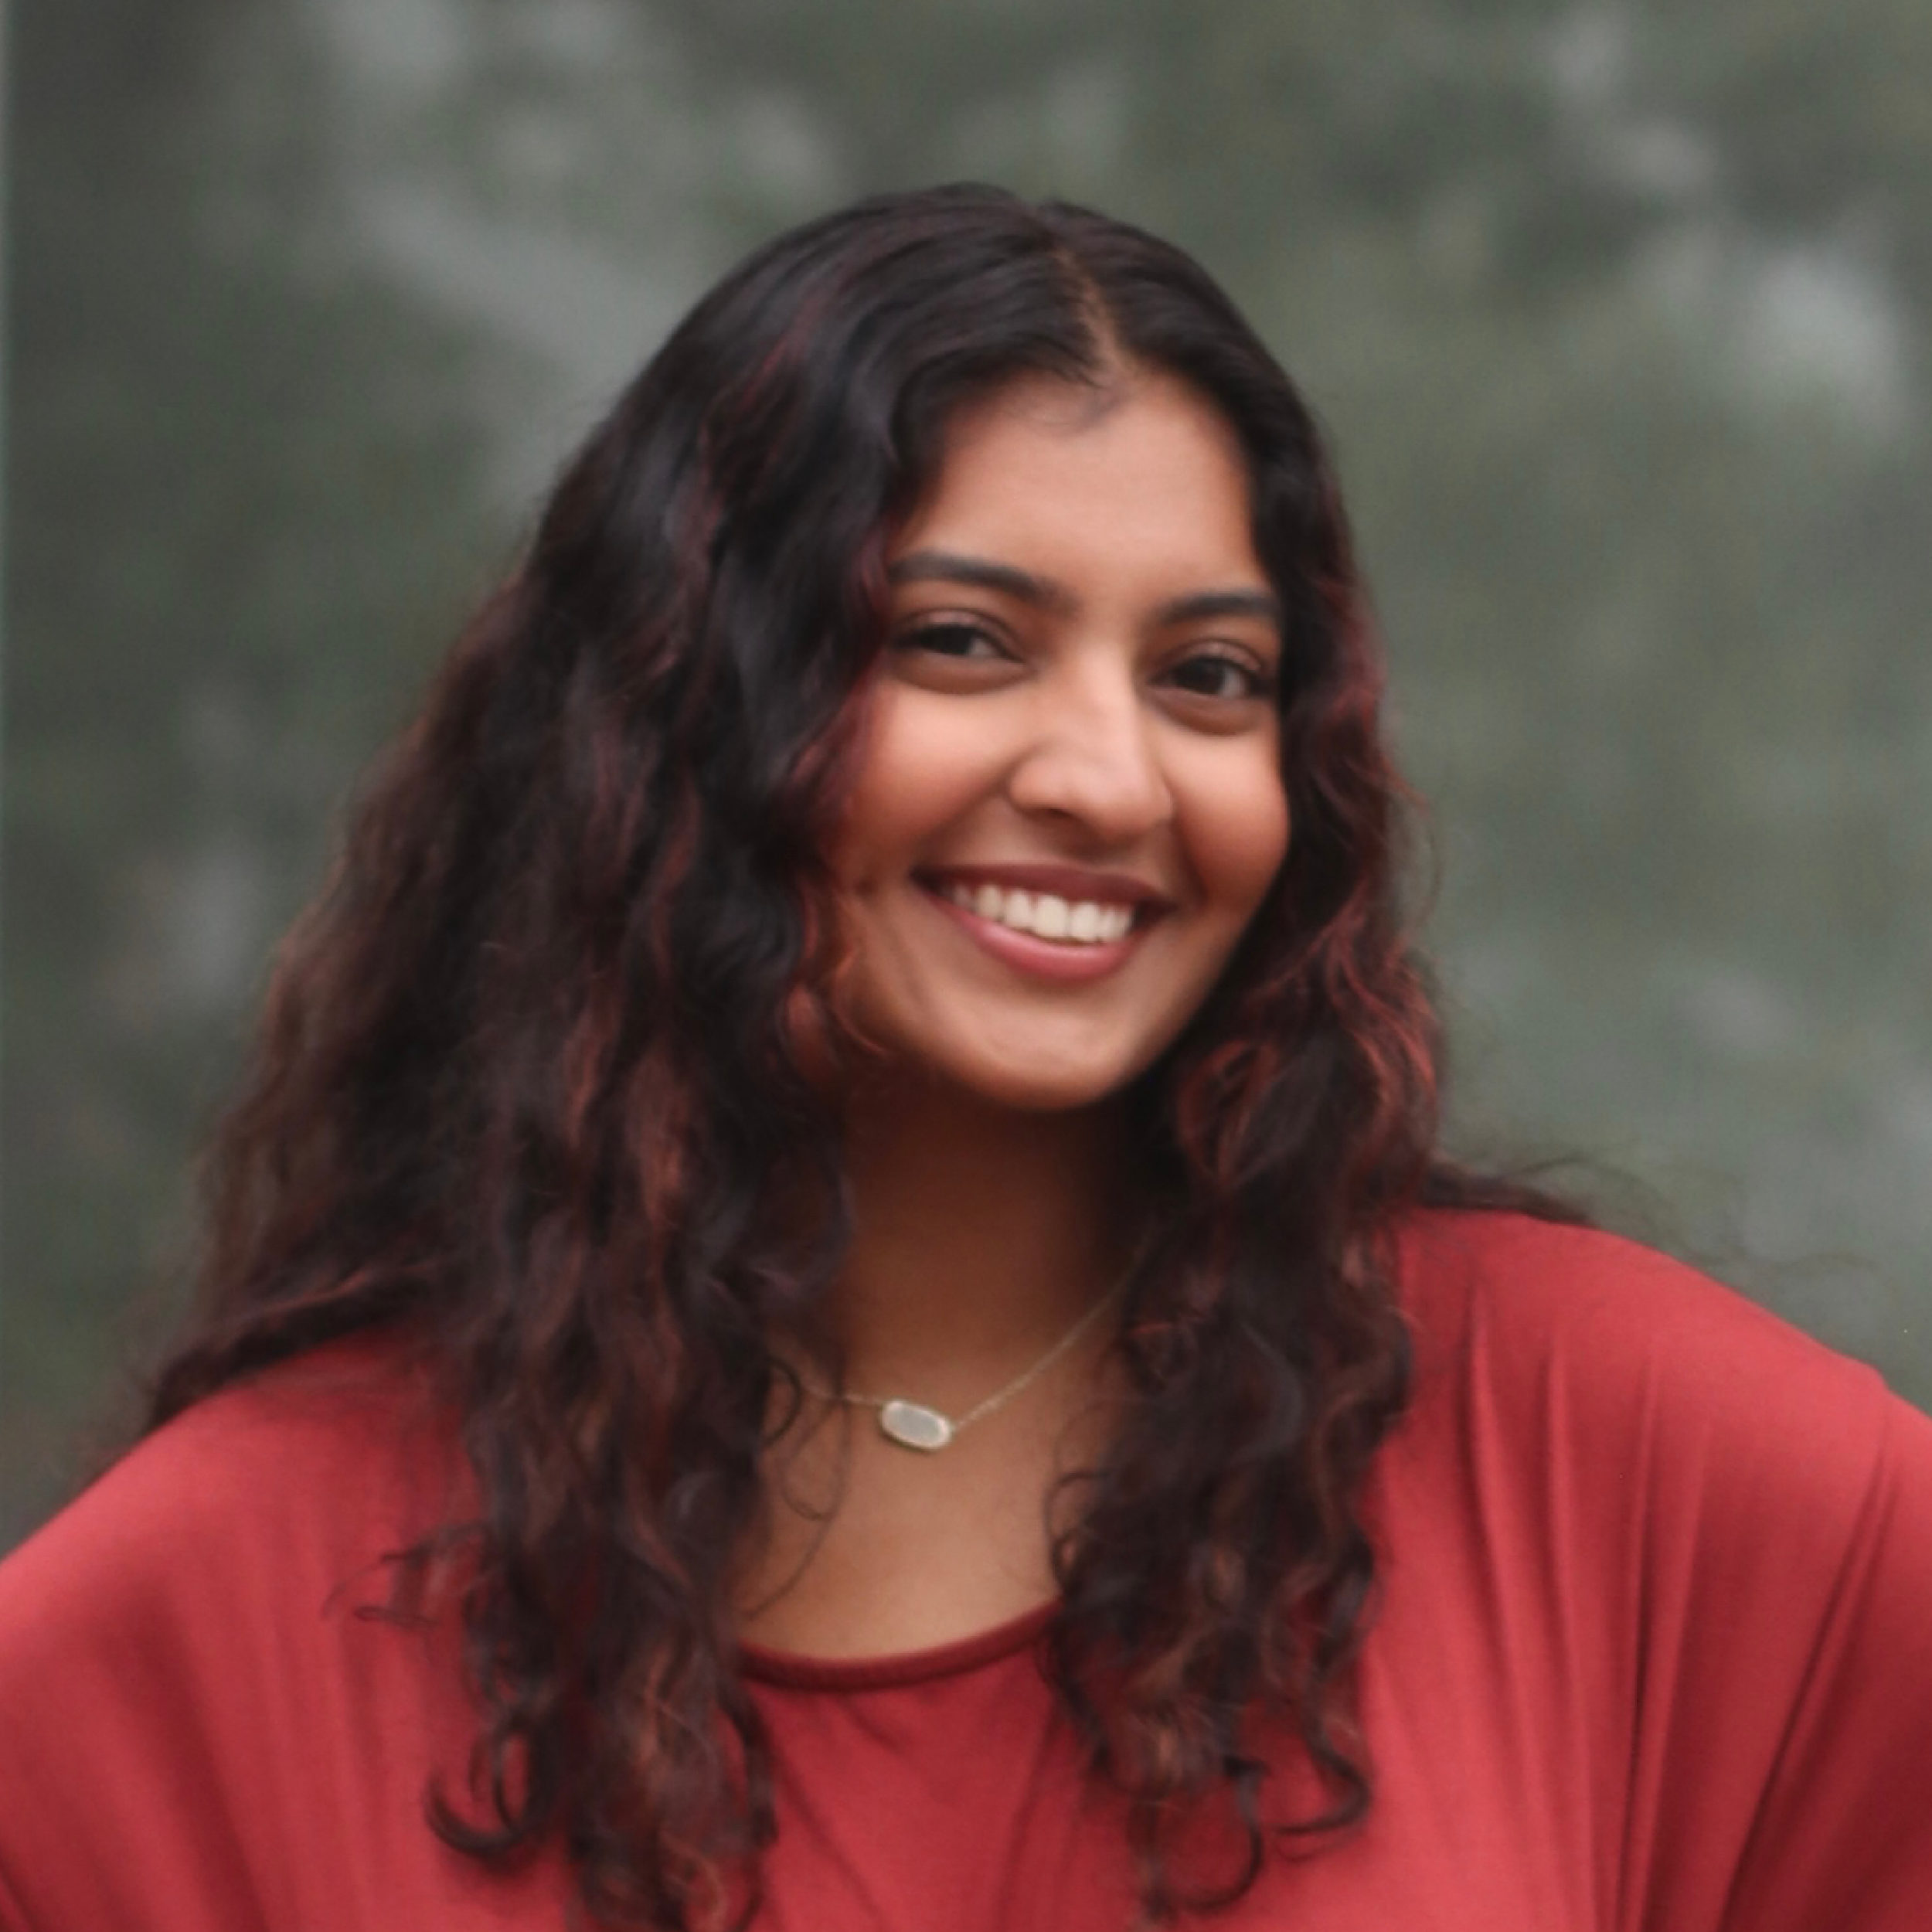 UNC Hussman student Aashna Shah ’23